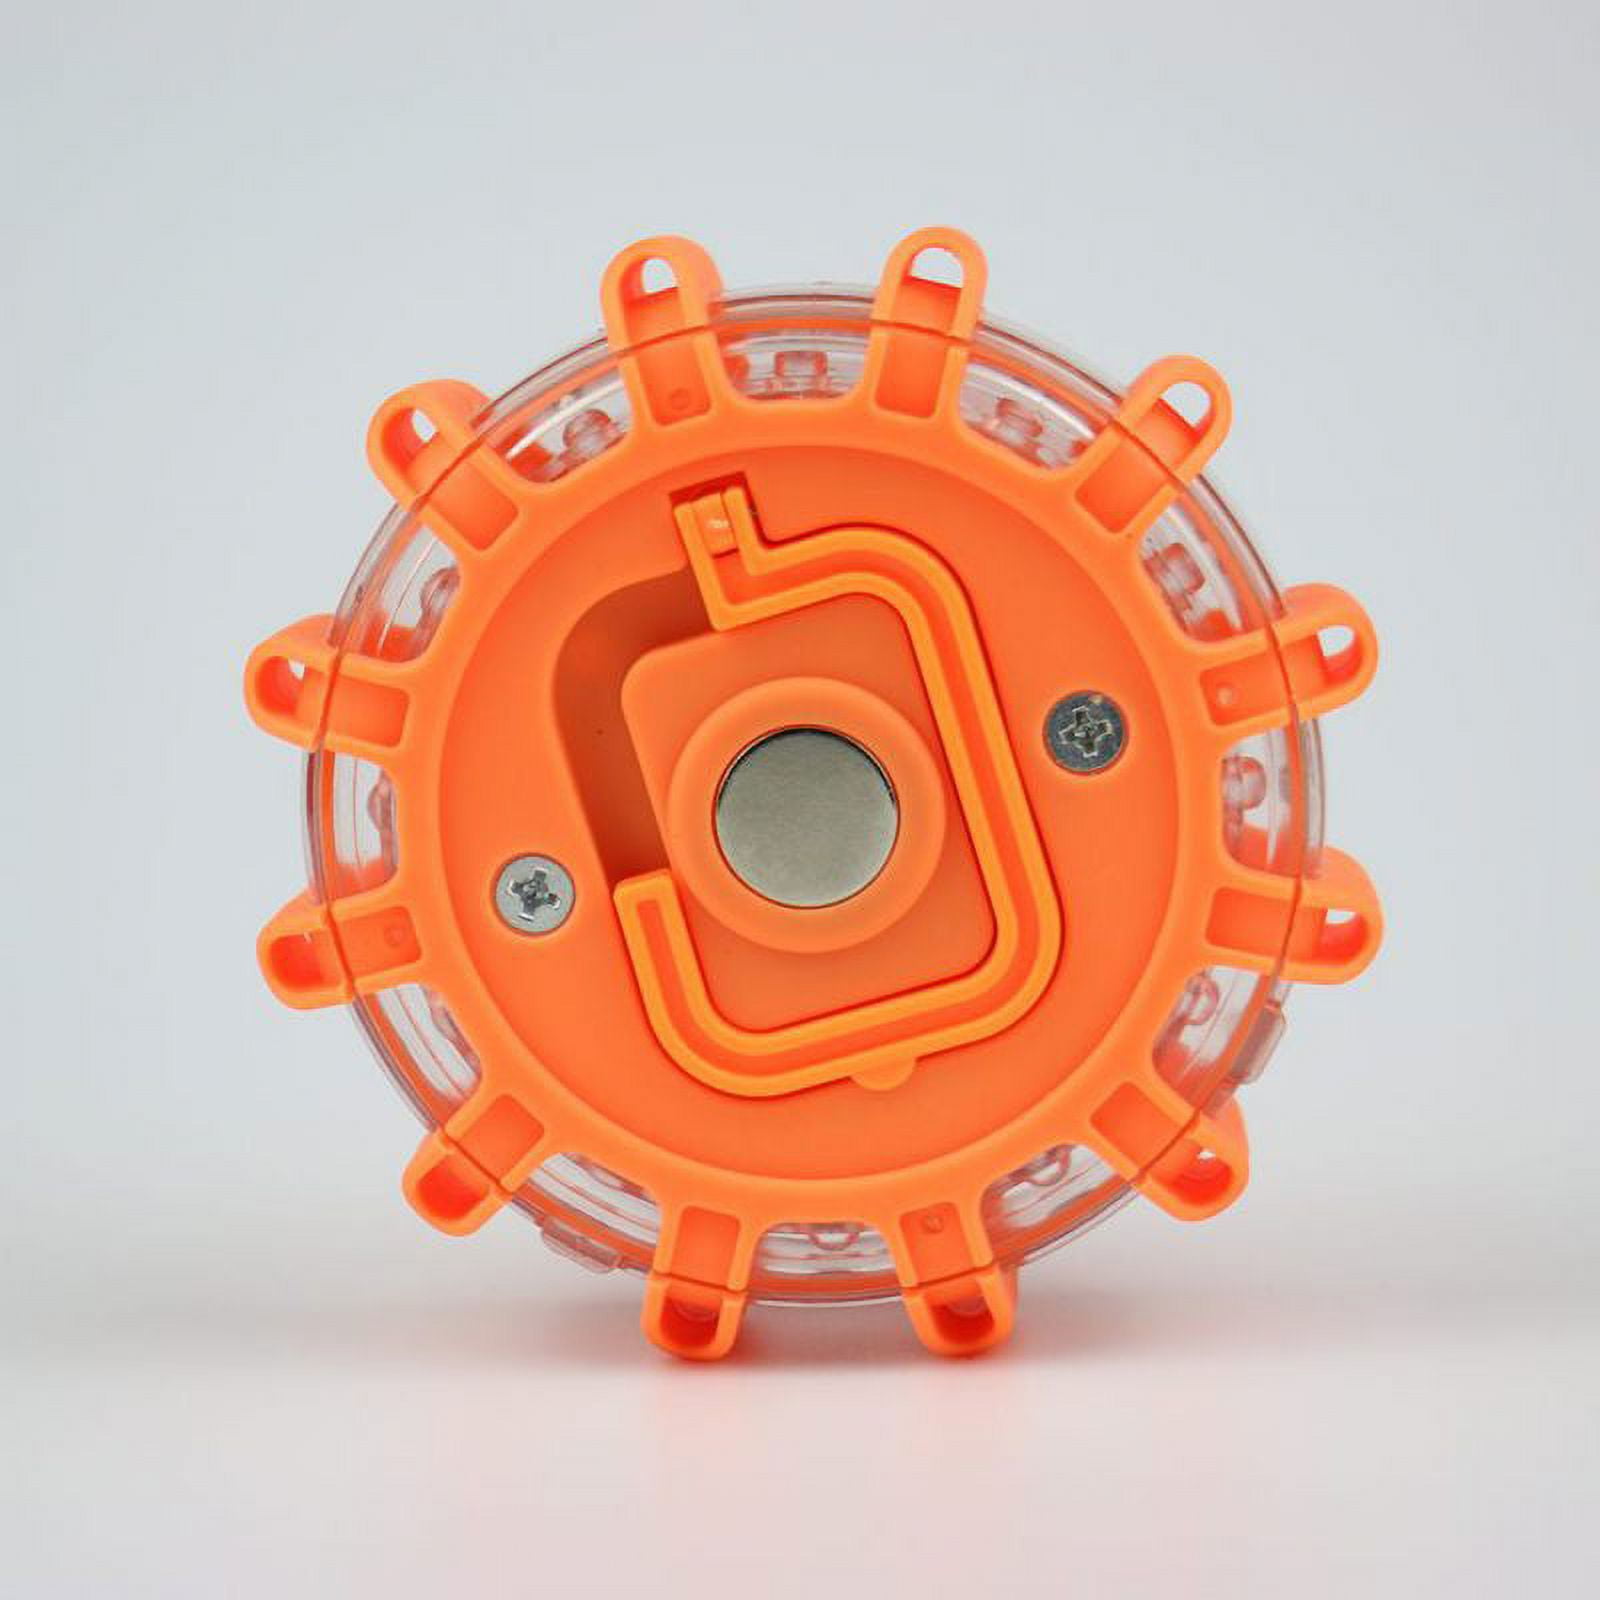 ElectraQuip - Clignotant LED orange 12/24 V 110x29x11 mm